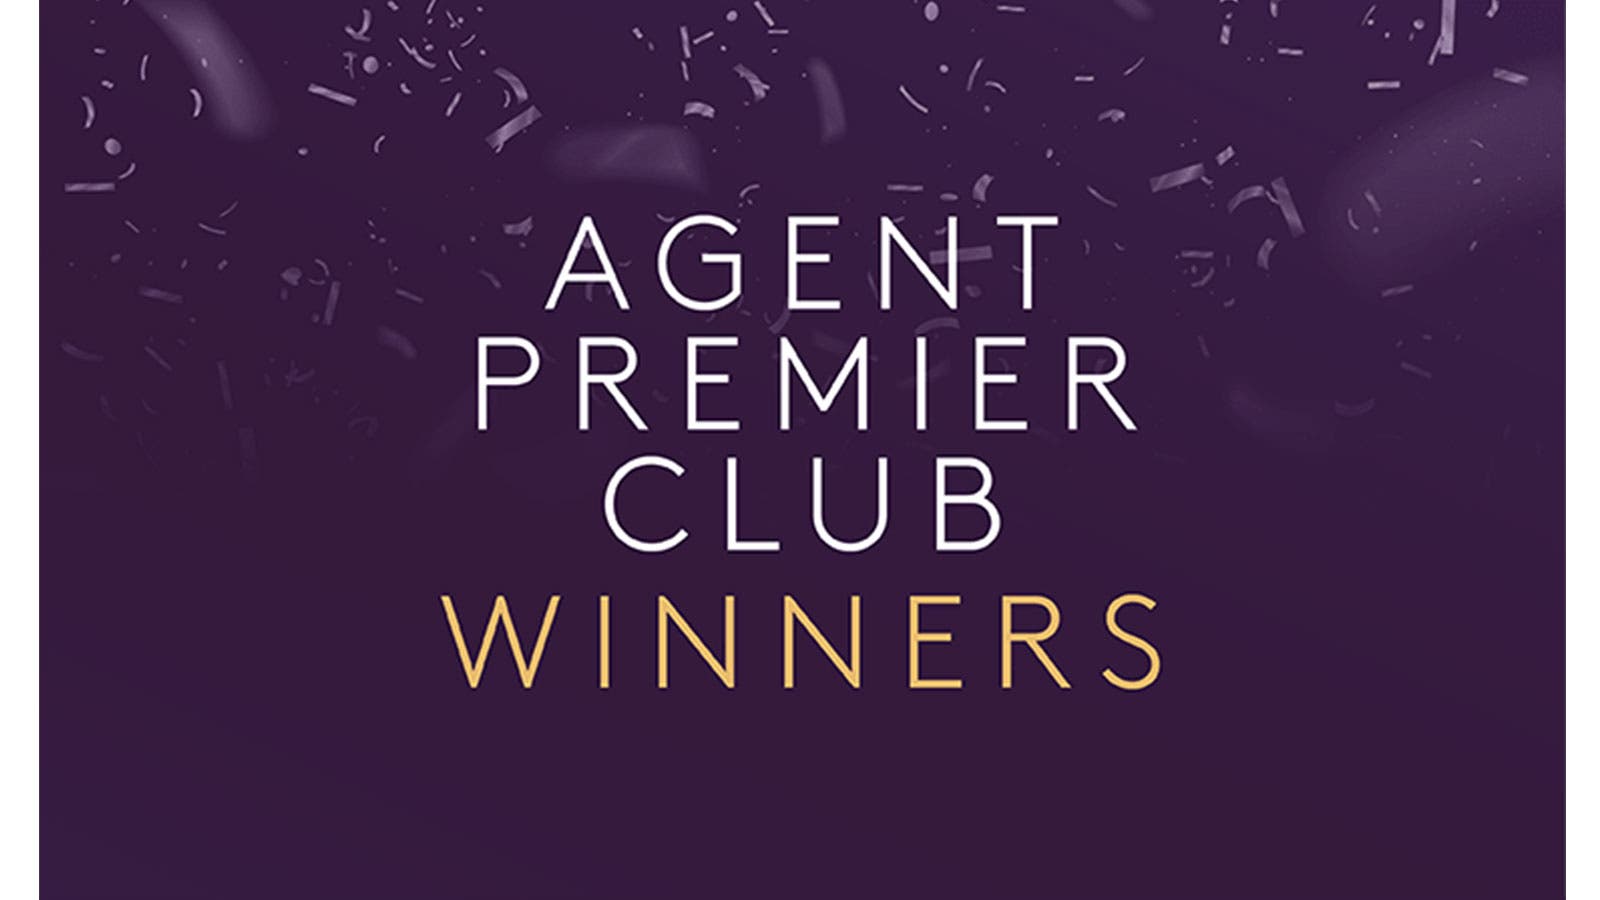 Agent Premier Club winners graphic